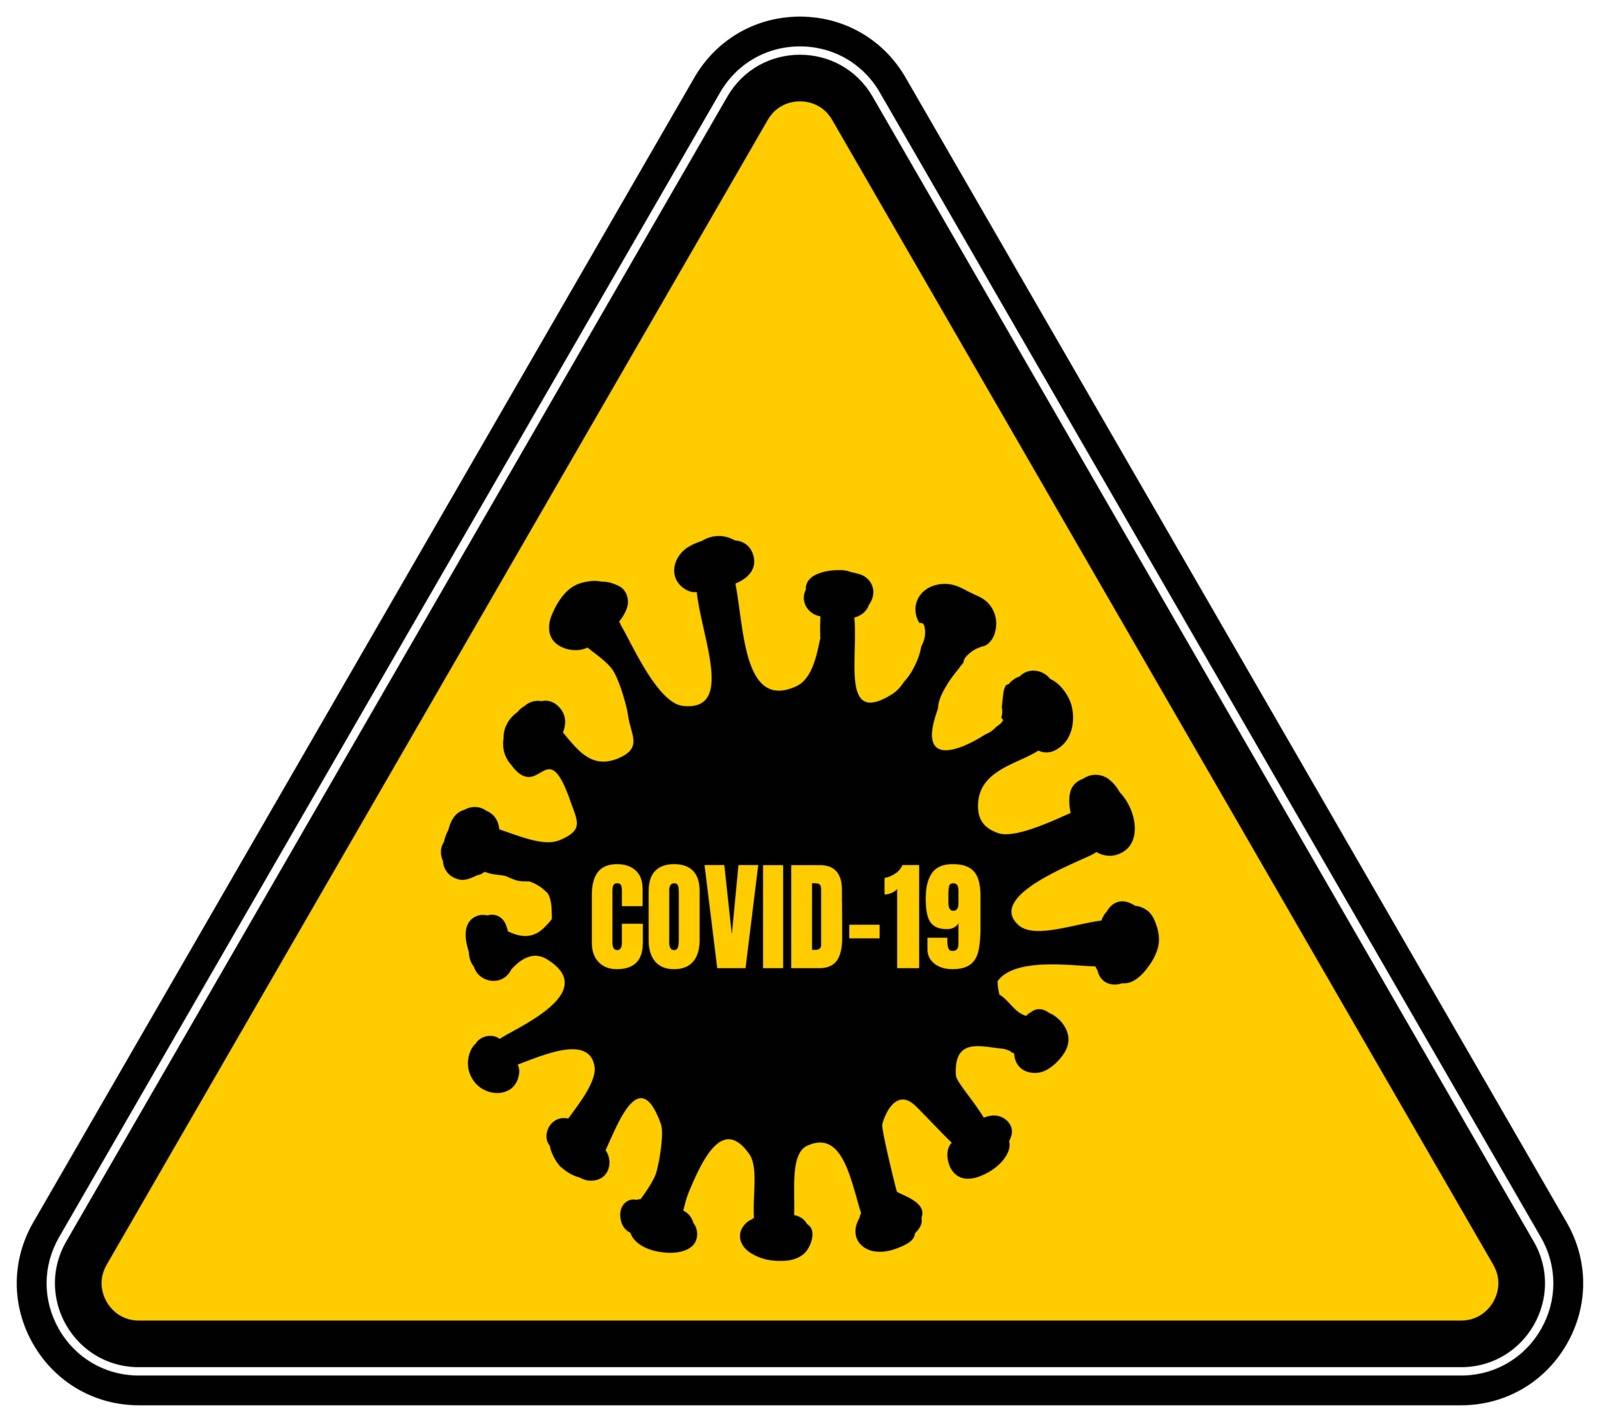 Abstract virus strain model coronavirus 2019-nCoV COVID-19 MERS-Cov Novel coronavirus crossed in sign of biohazard warning triangle